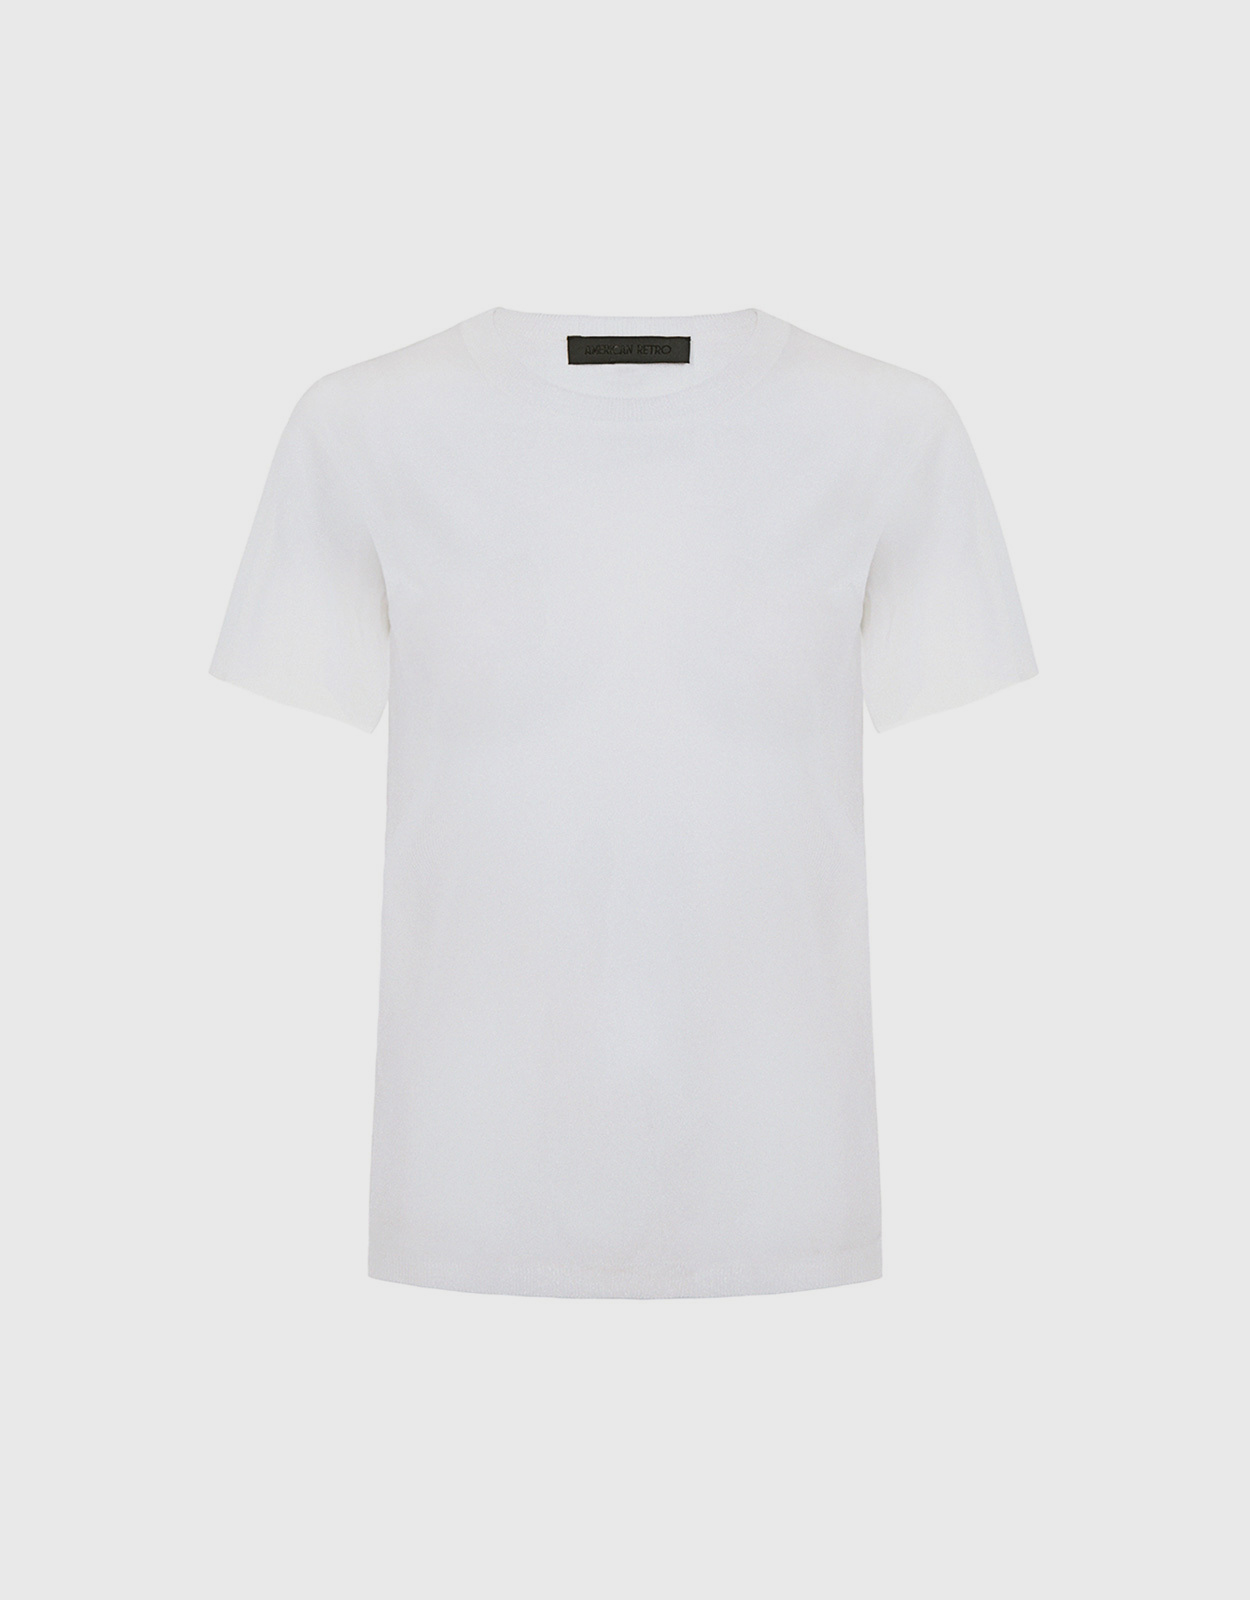 Louis vuitton embossed white tshirt